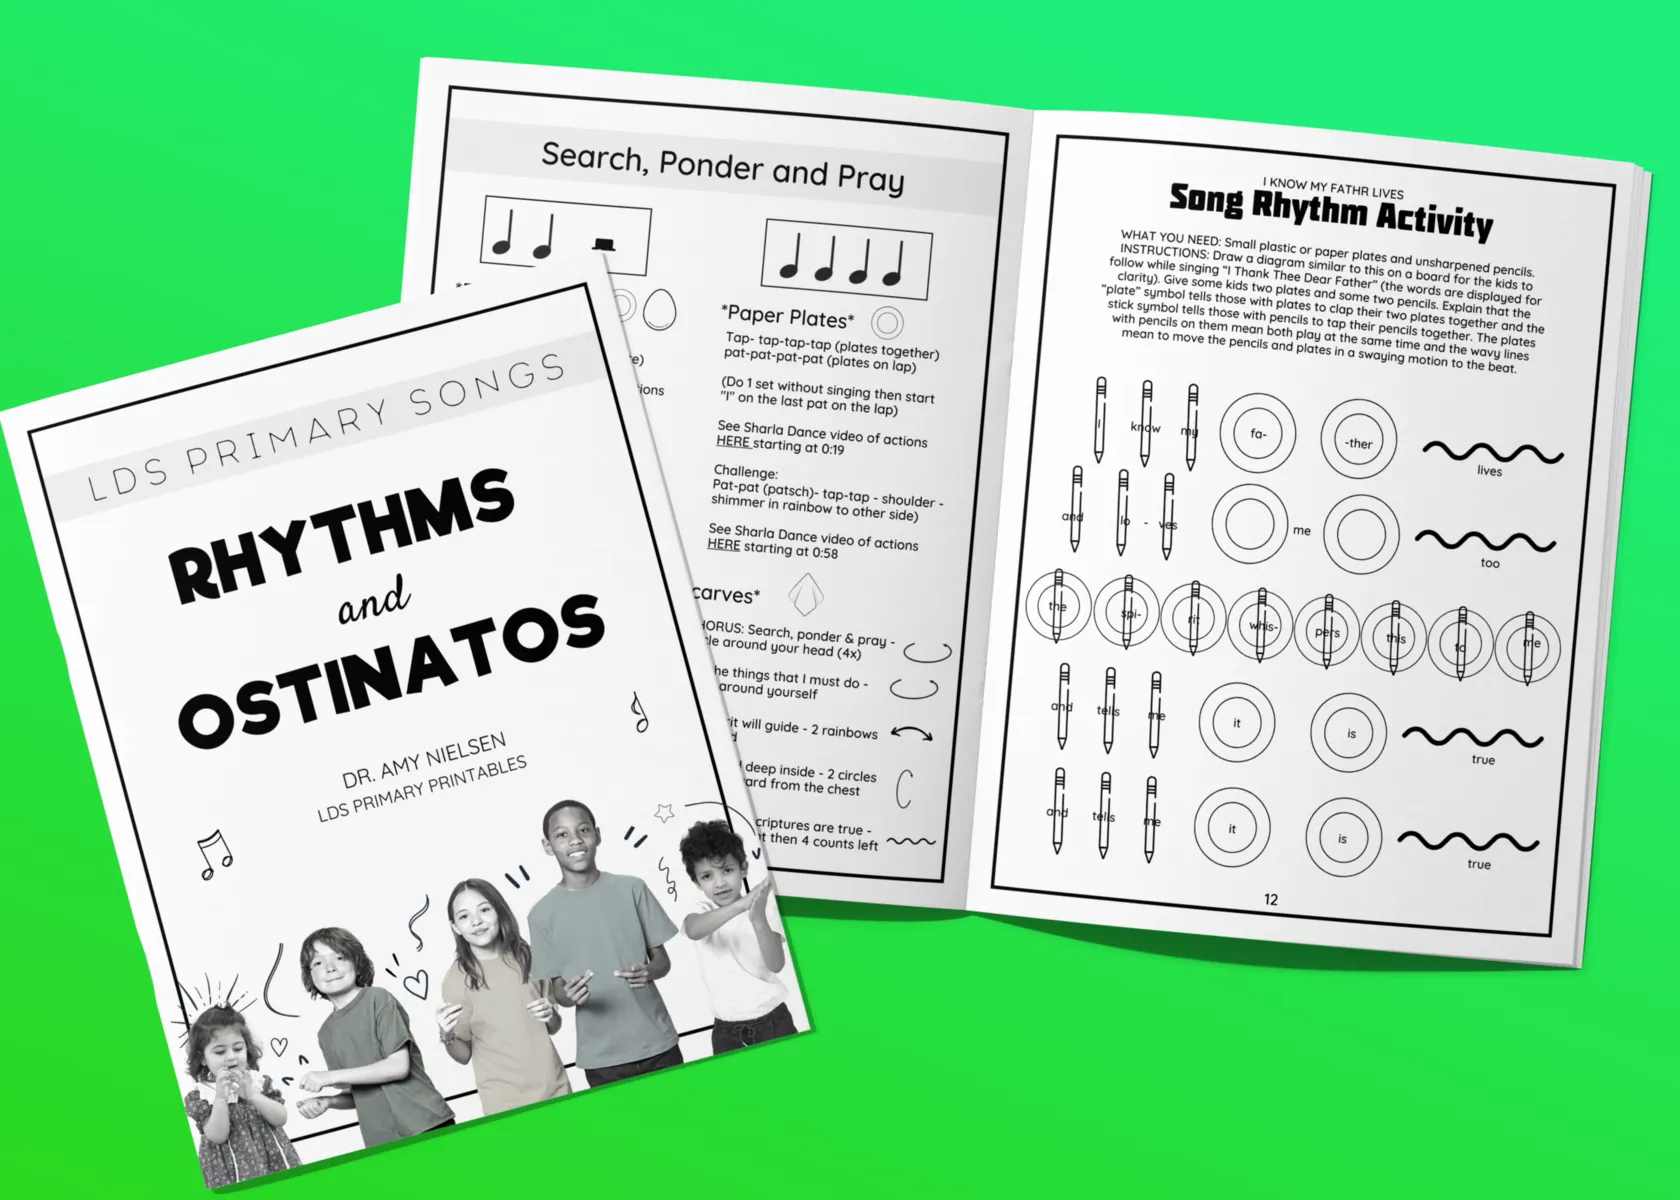 LDS Primary Song Rhythms and Ostinatos ebook